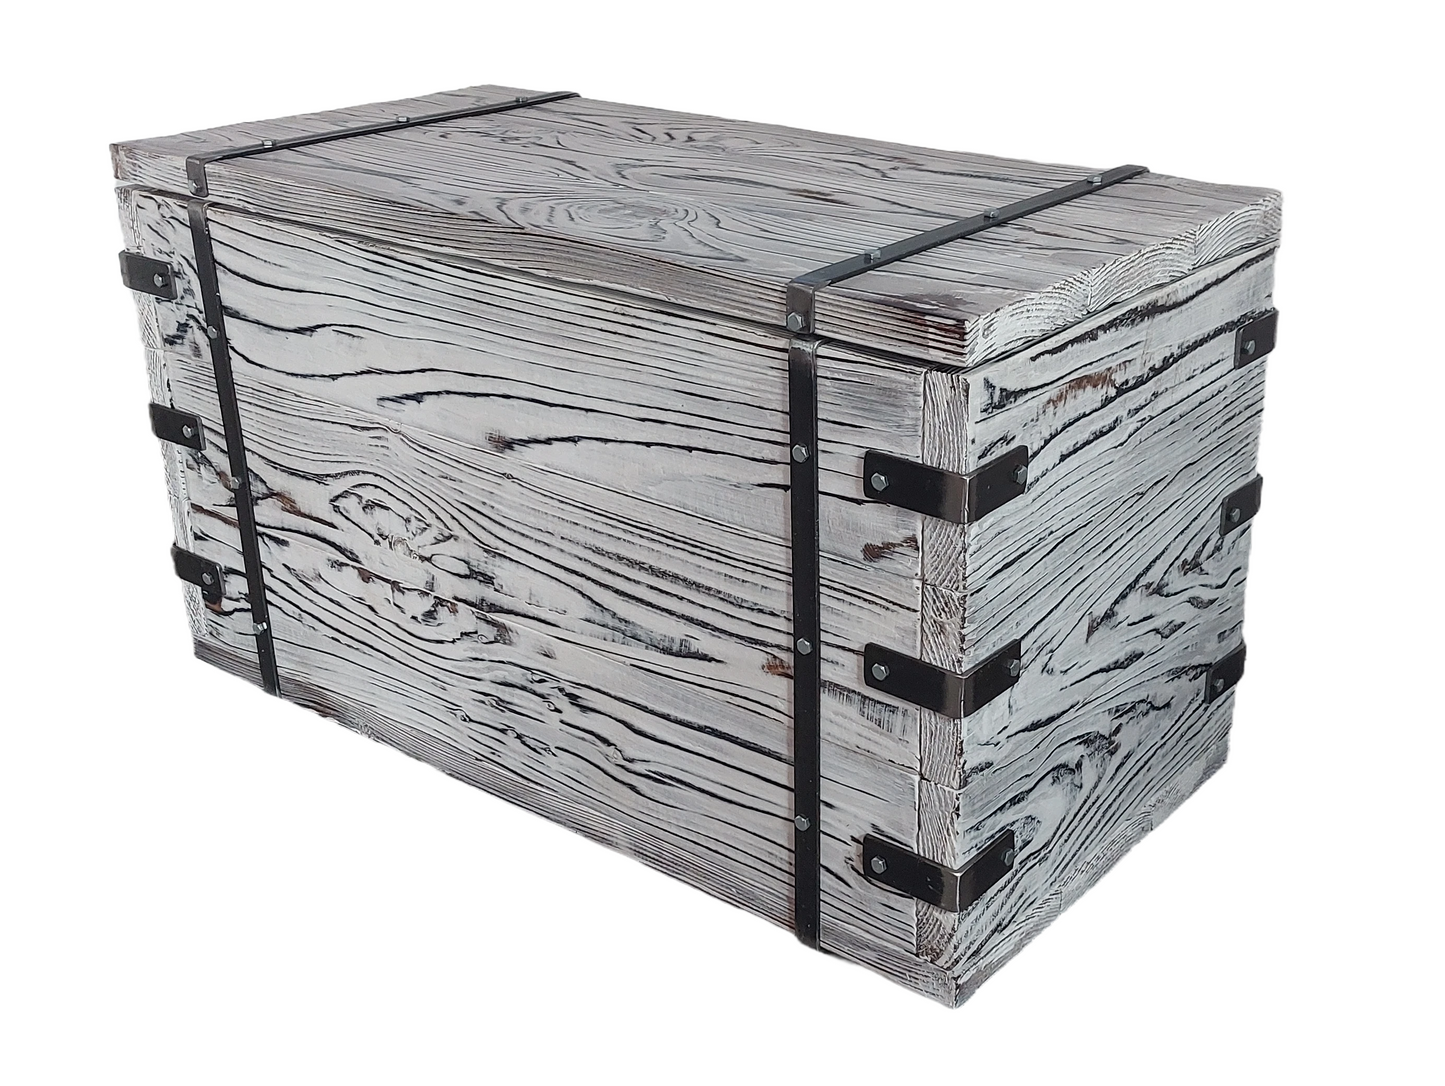 CHYRKA® Chest table wooden box BORYSLAW wooden table living room table side table wooden chest (L=83 xW=40 xH=50 cm) handmade wood vintage metal